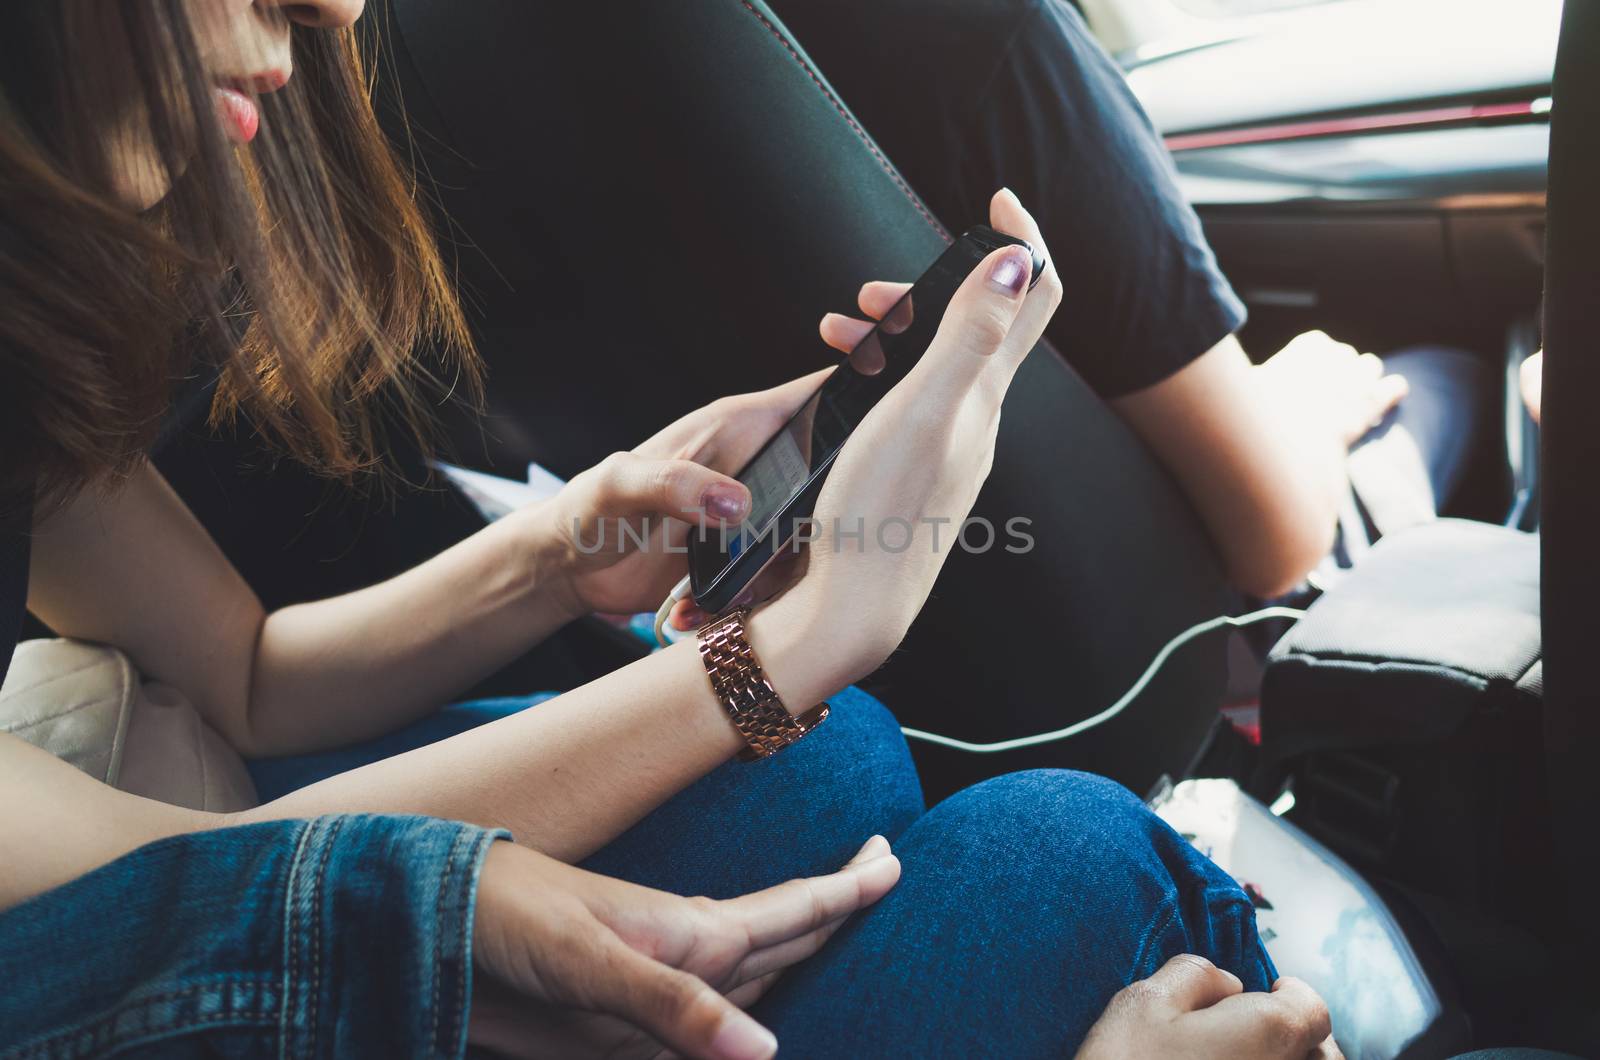 Women using phone in the car.